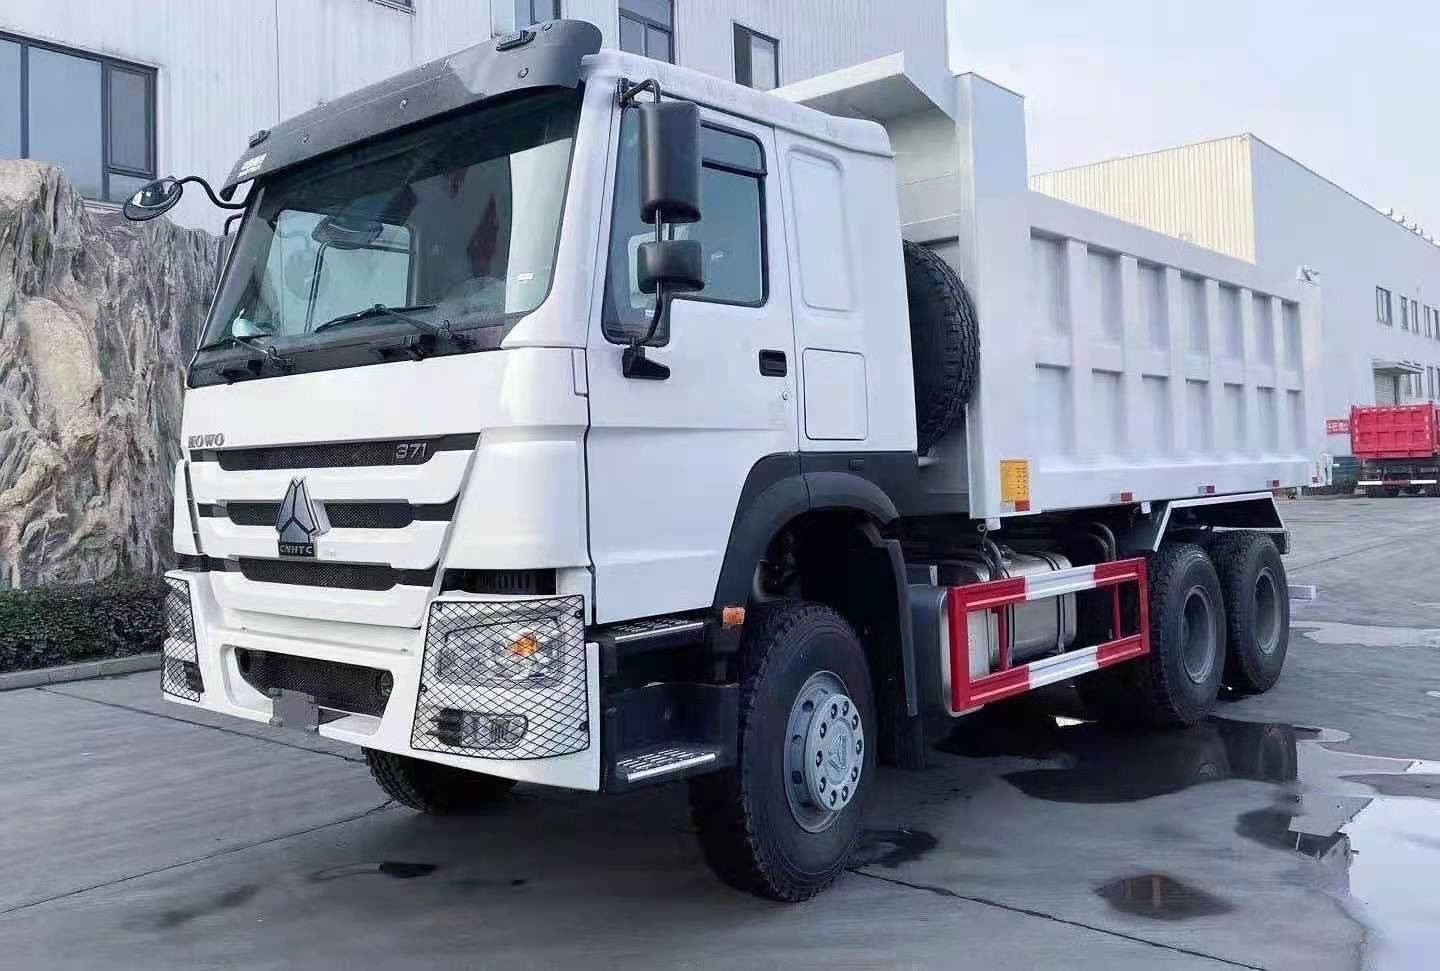 WD Series Engine Sinotruk Howo 6X4 Heavy Duty Dump Truck